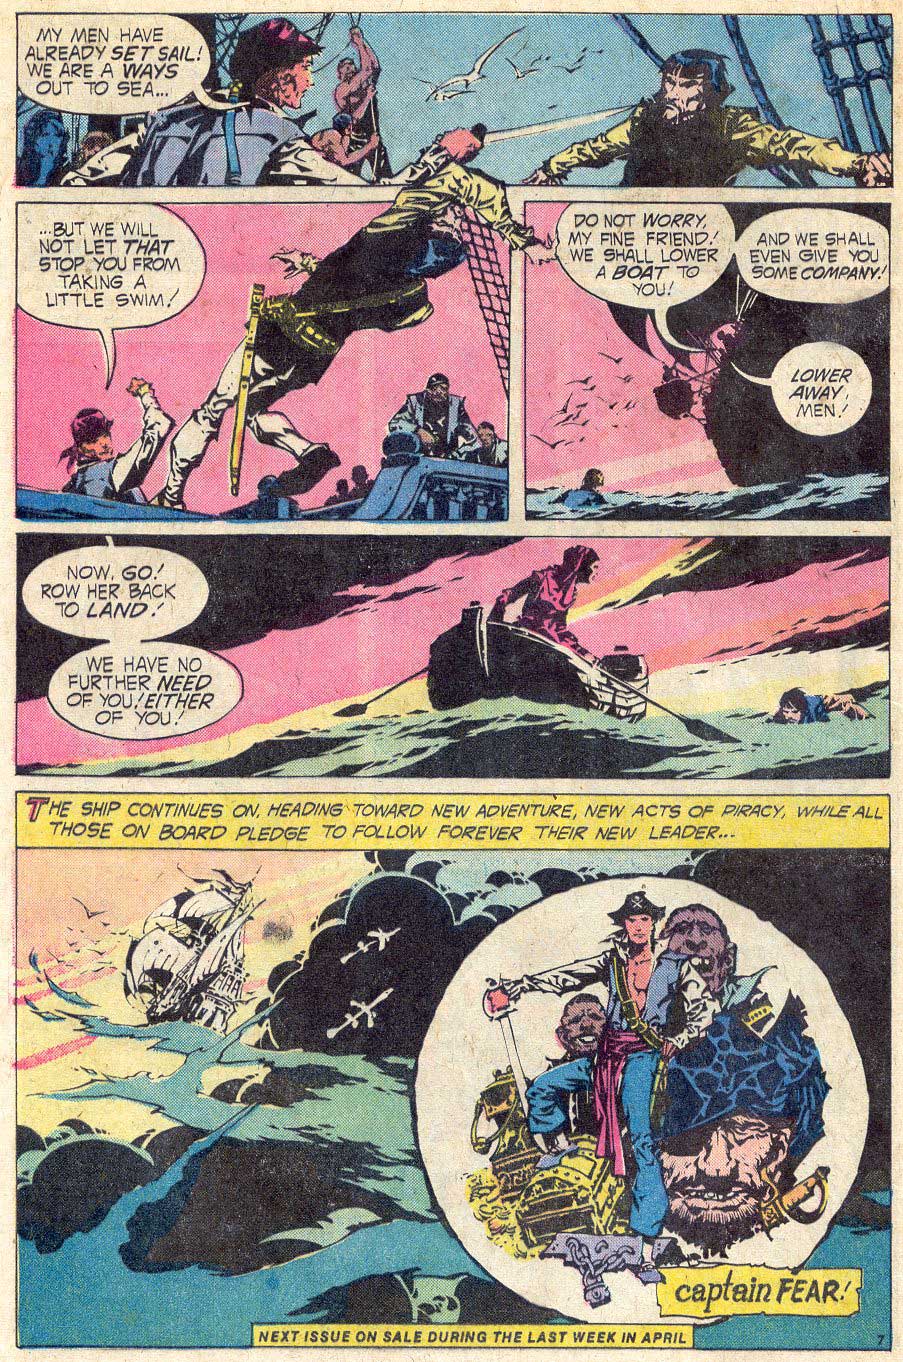 Adventure Comics #433 (1974) by Steve Skeates and Alex Nino